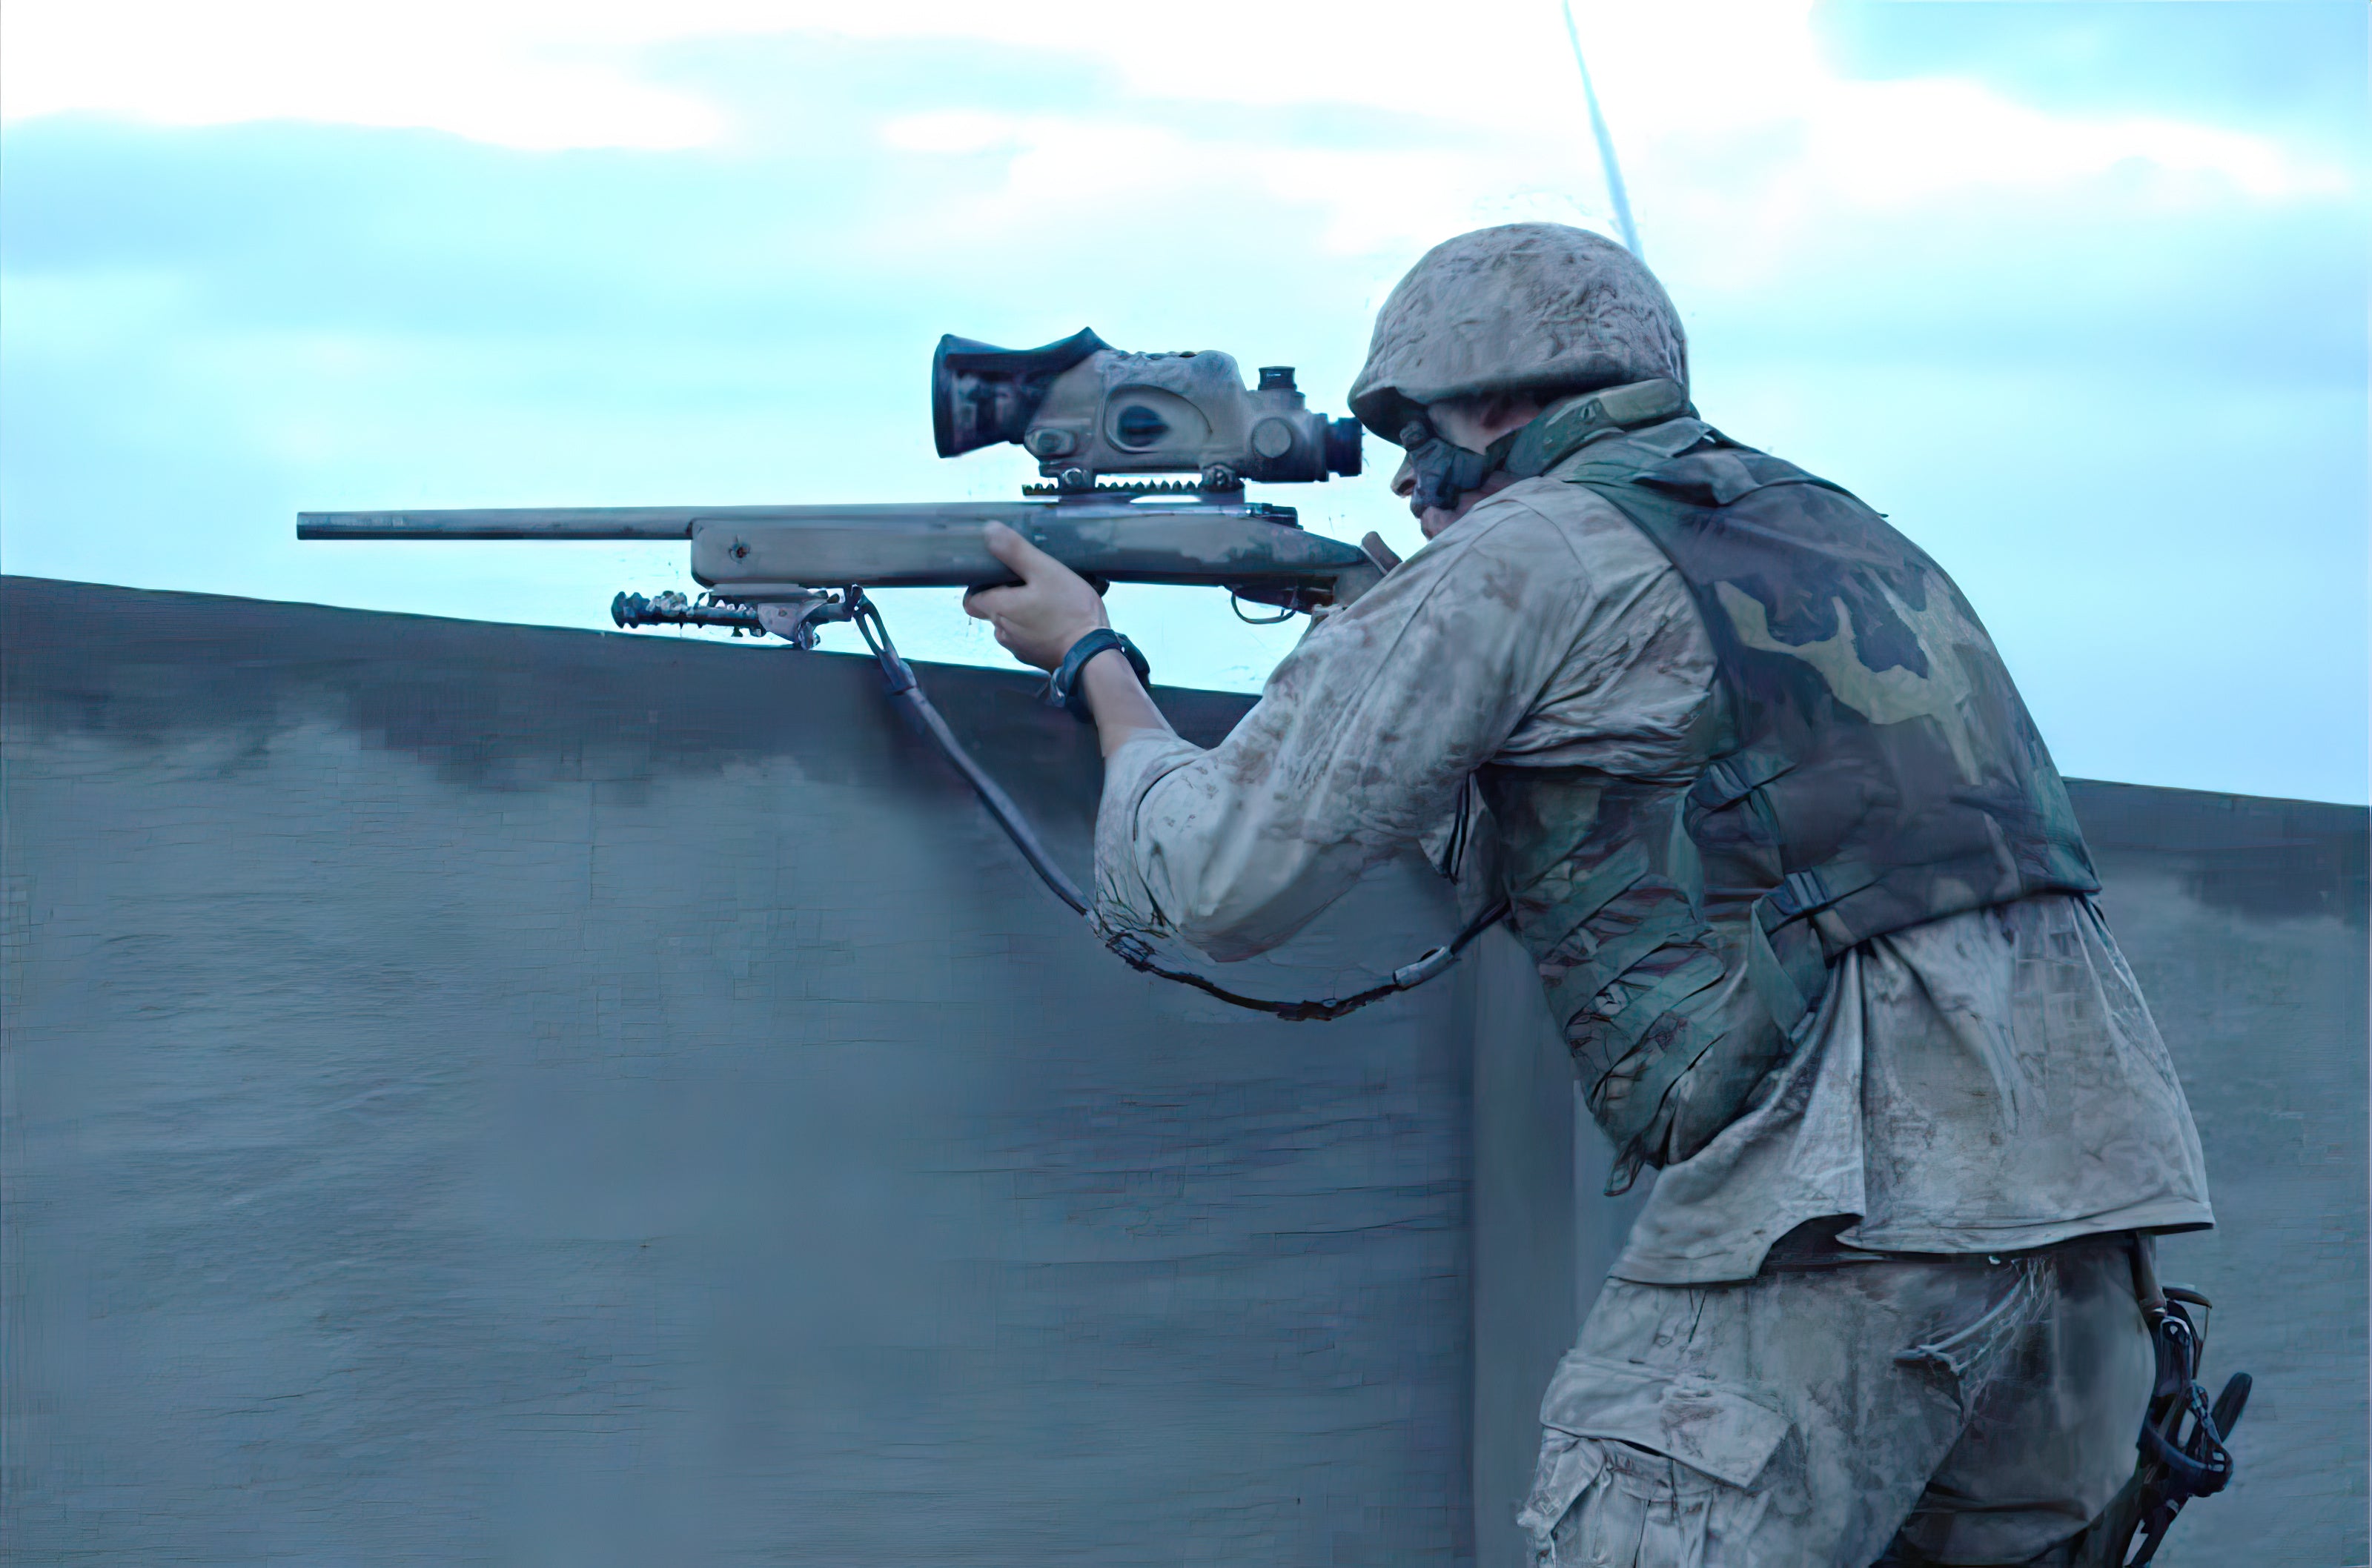 Battlefield Fallujah - Episode 11: Parting Shots (November 14 - December 23, 2004) - Image from battle